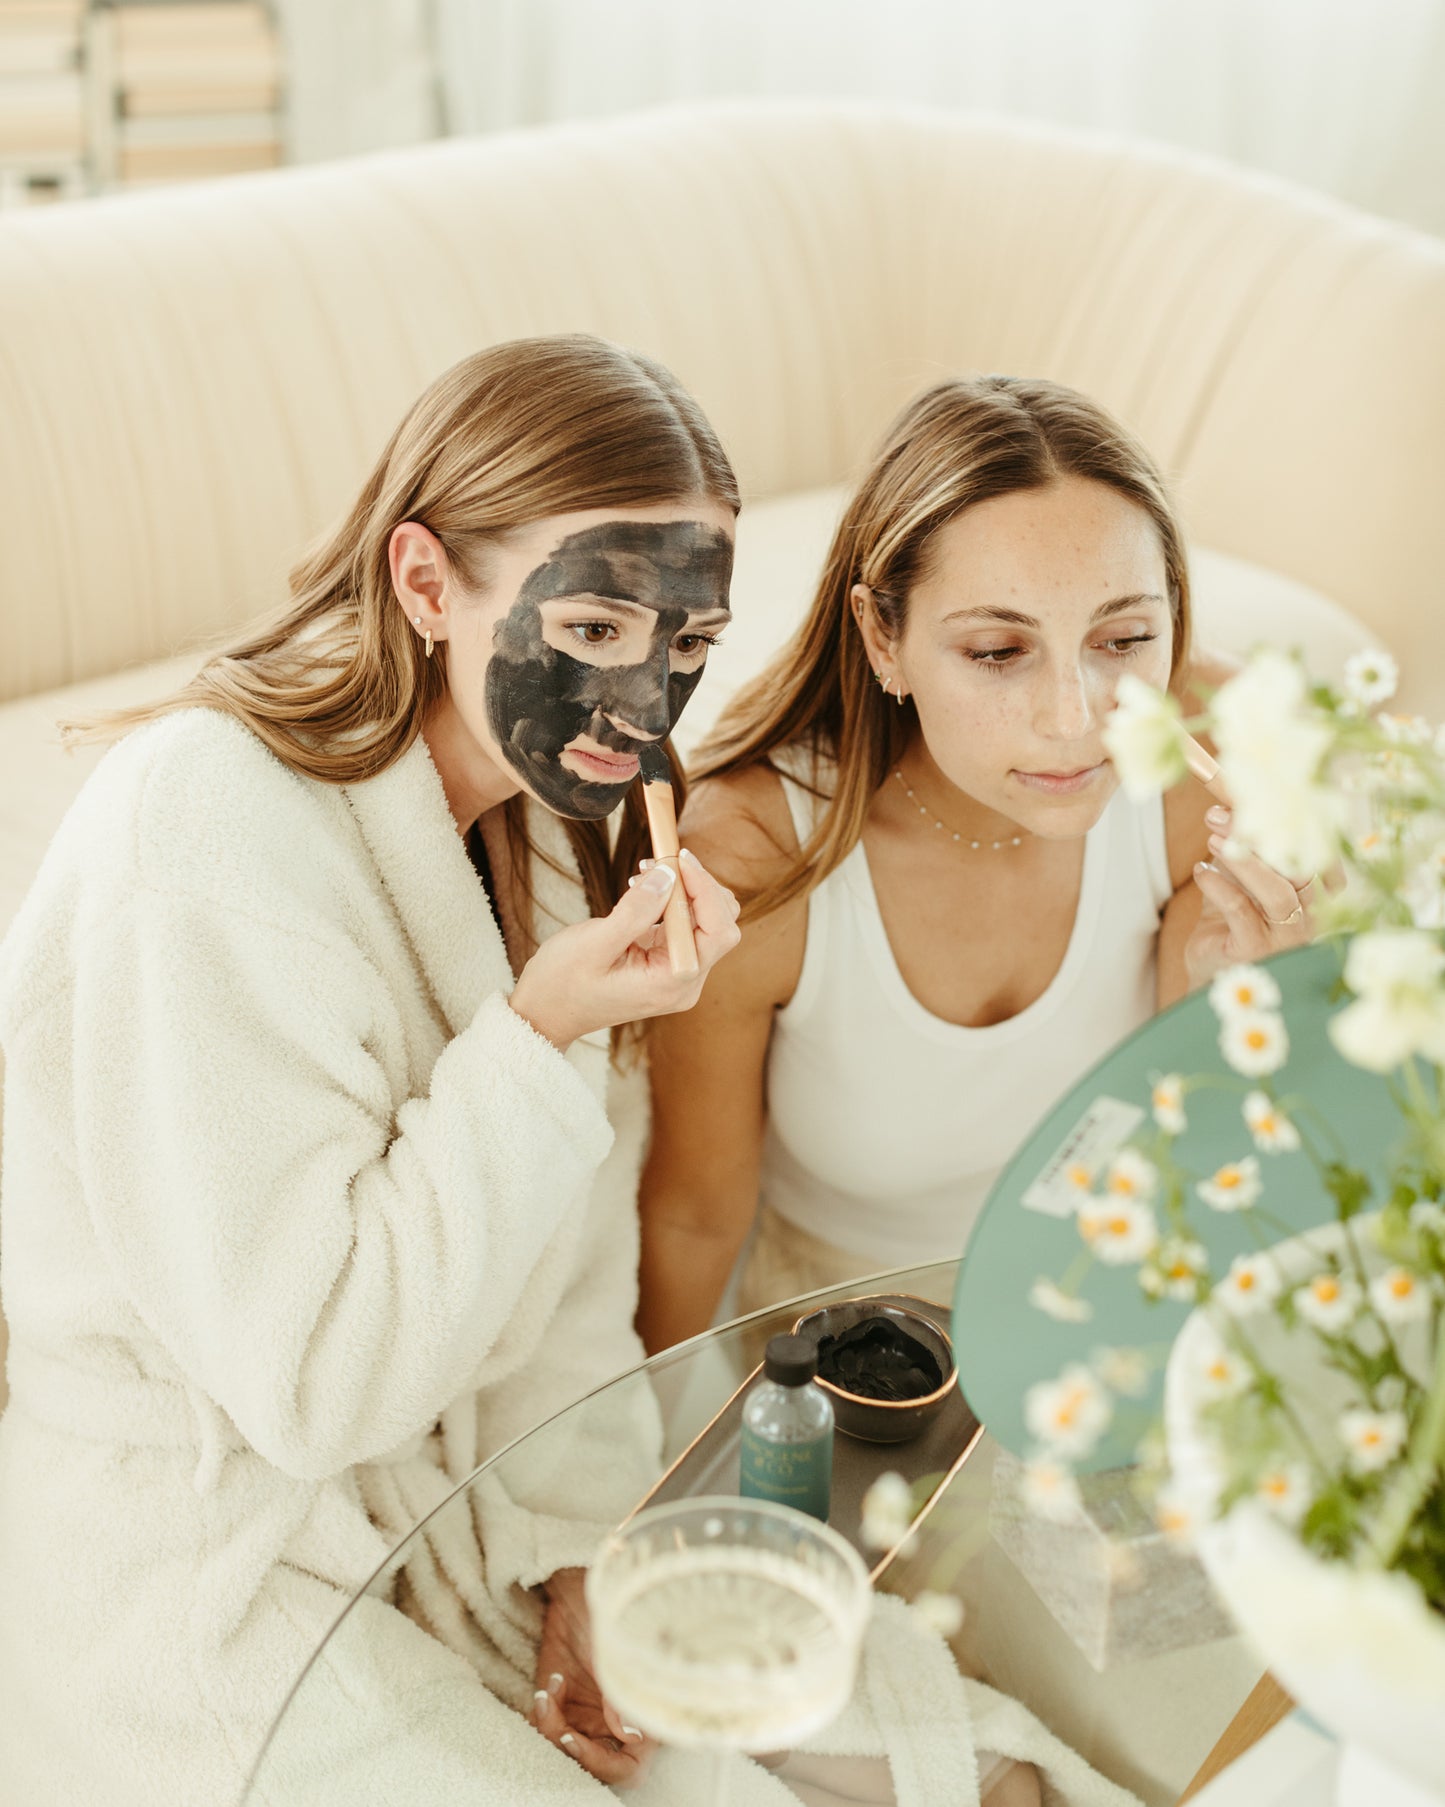 Resurfacing and Detox Face Mask Set